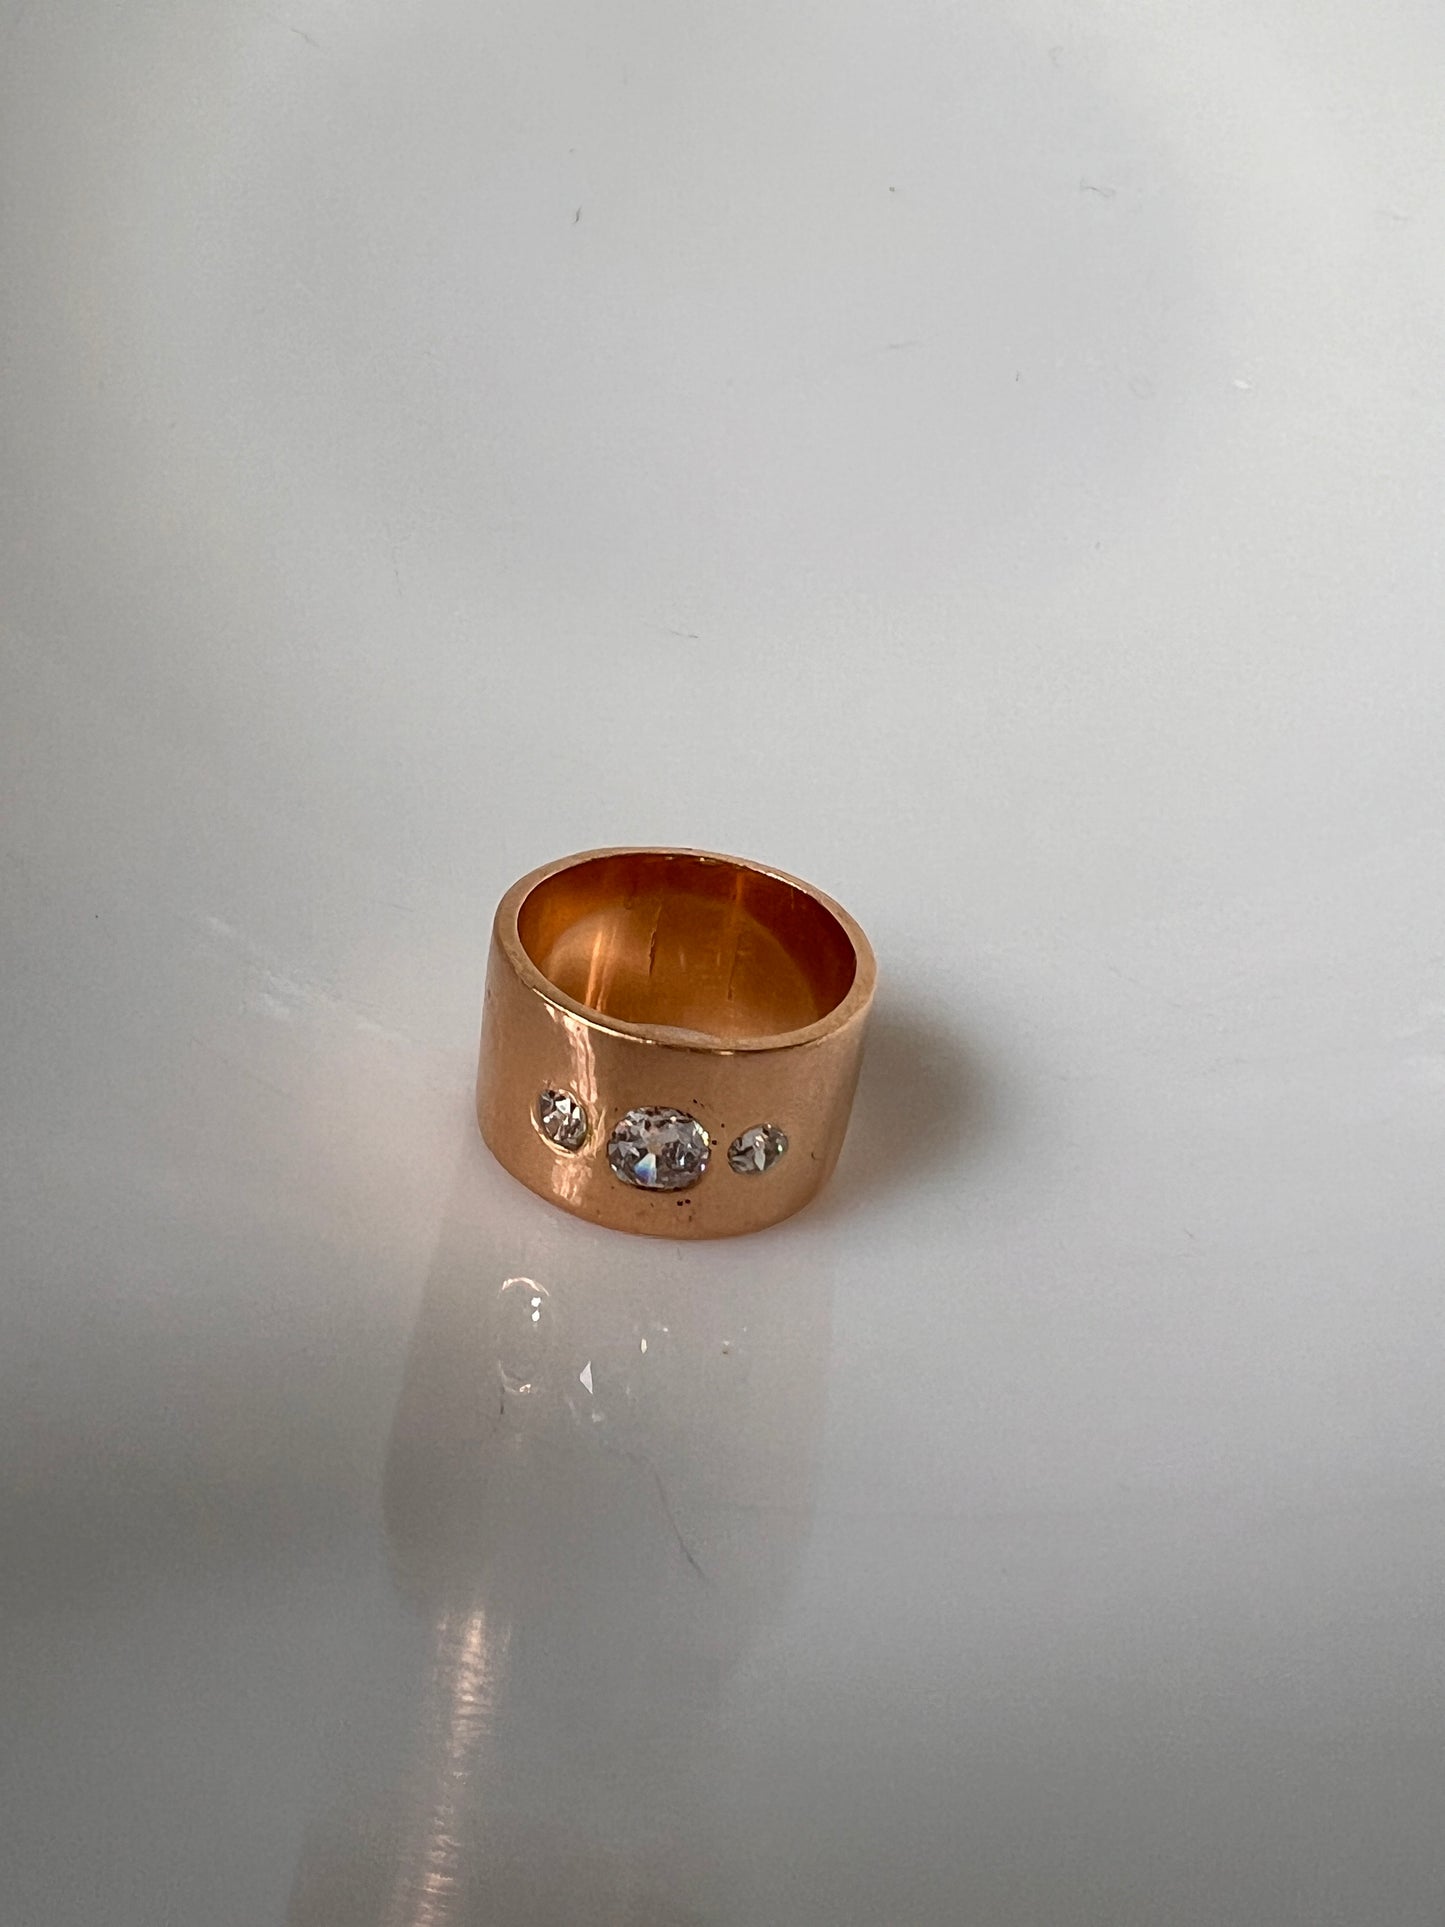 HEAVY 14.4g Antique .8 Carat Old Mine Cut DIAMOND Three Stone Ring 18k Gold 12mm Wide Band